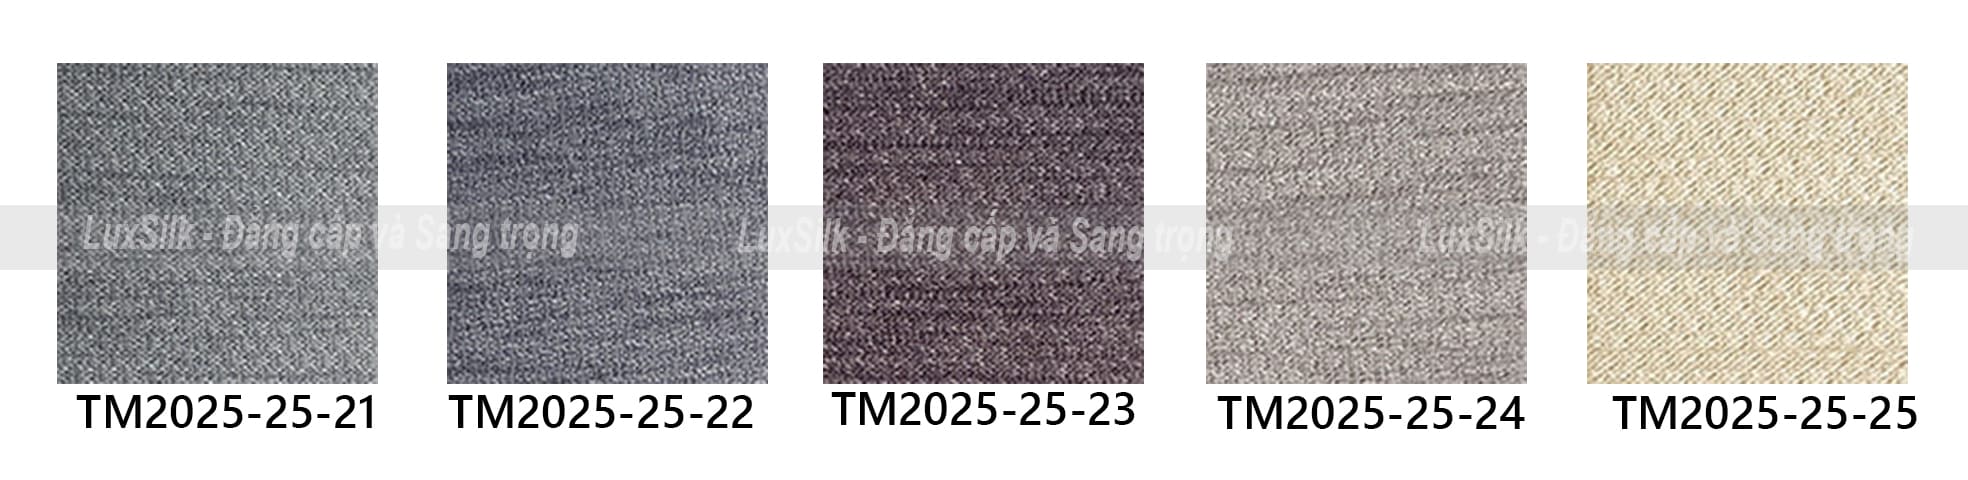 Rèm vải TM2025-25